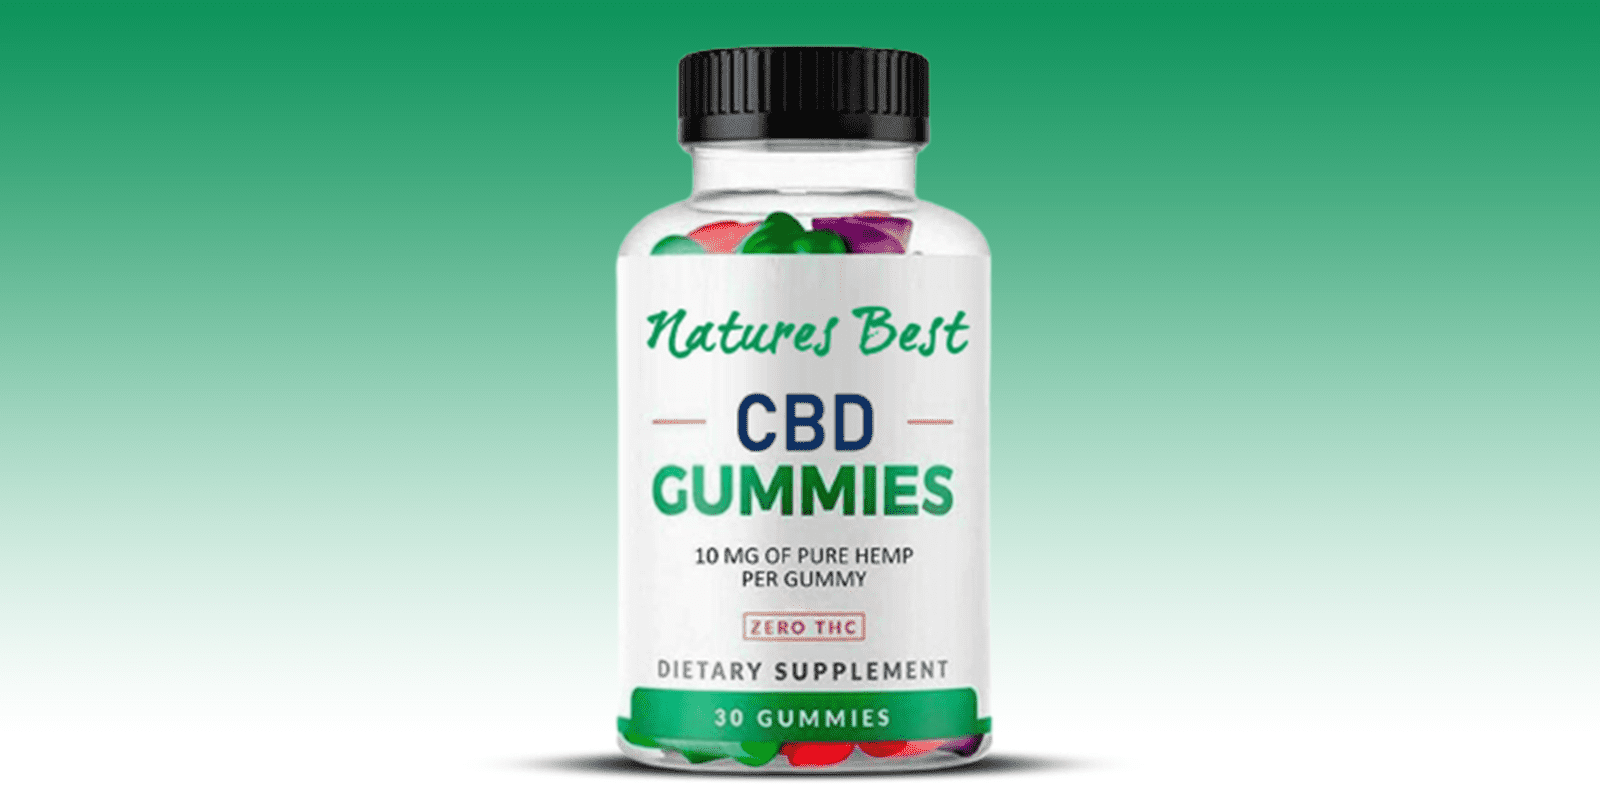 Natures Best CBD Gummies Reviews